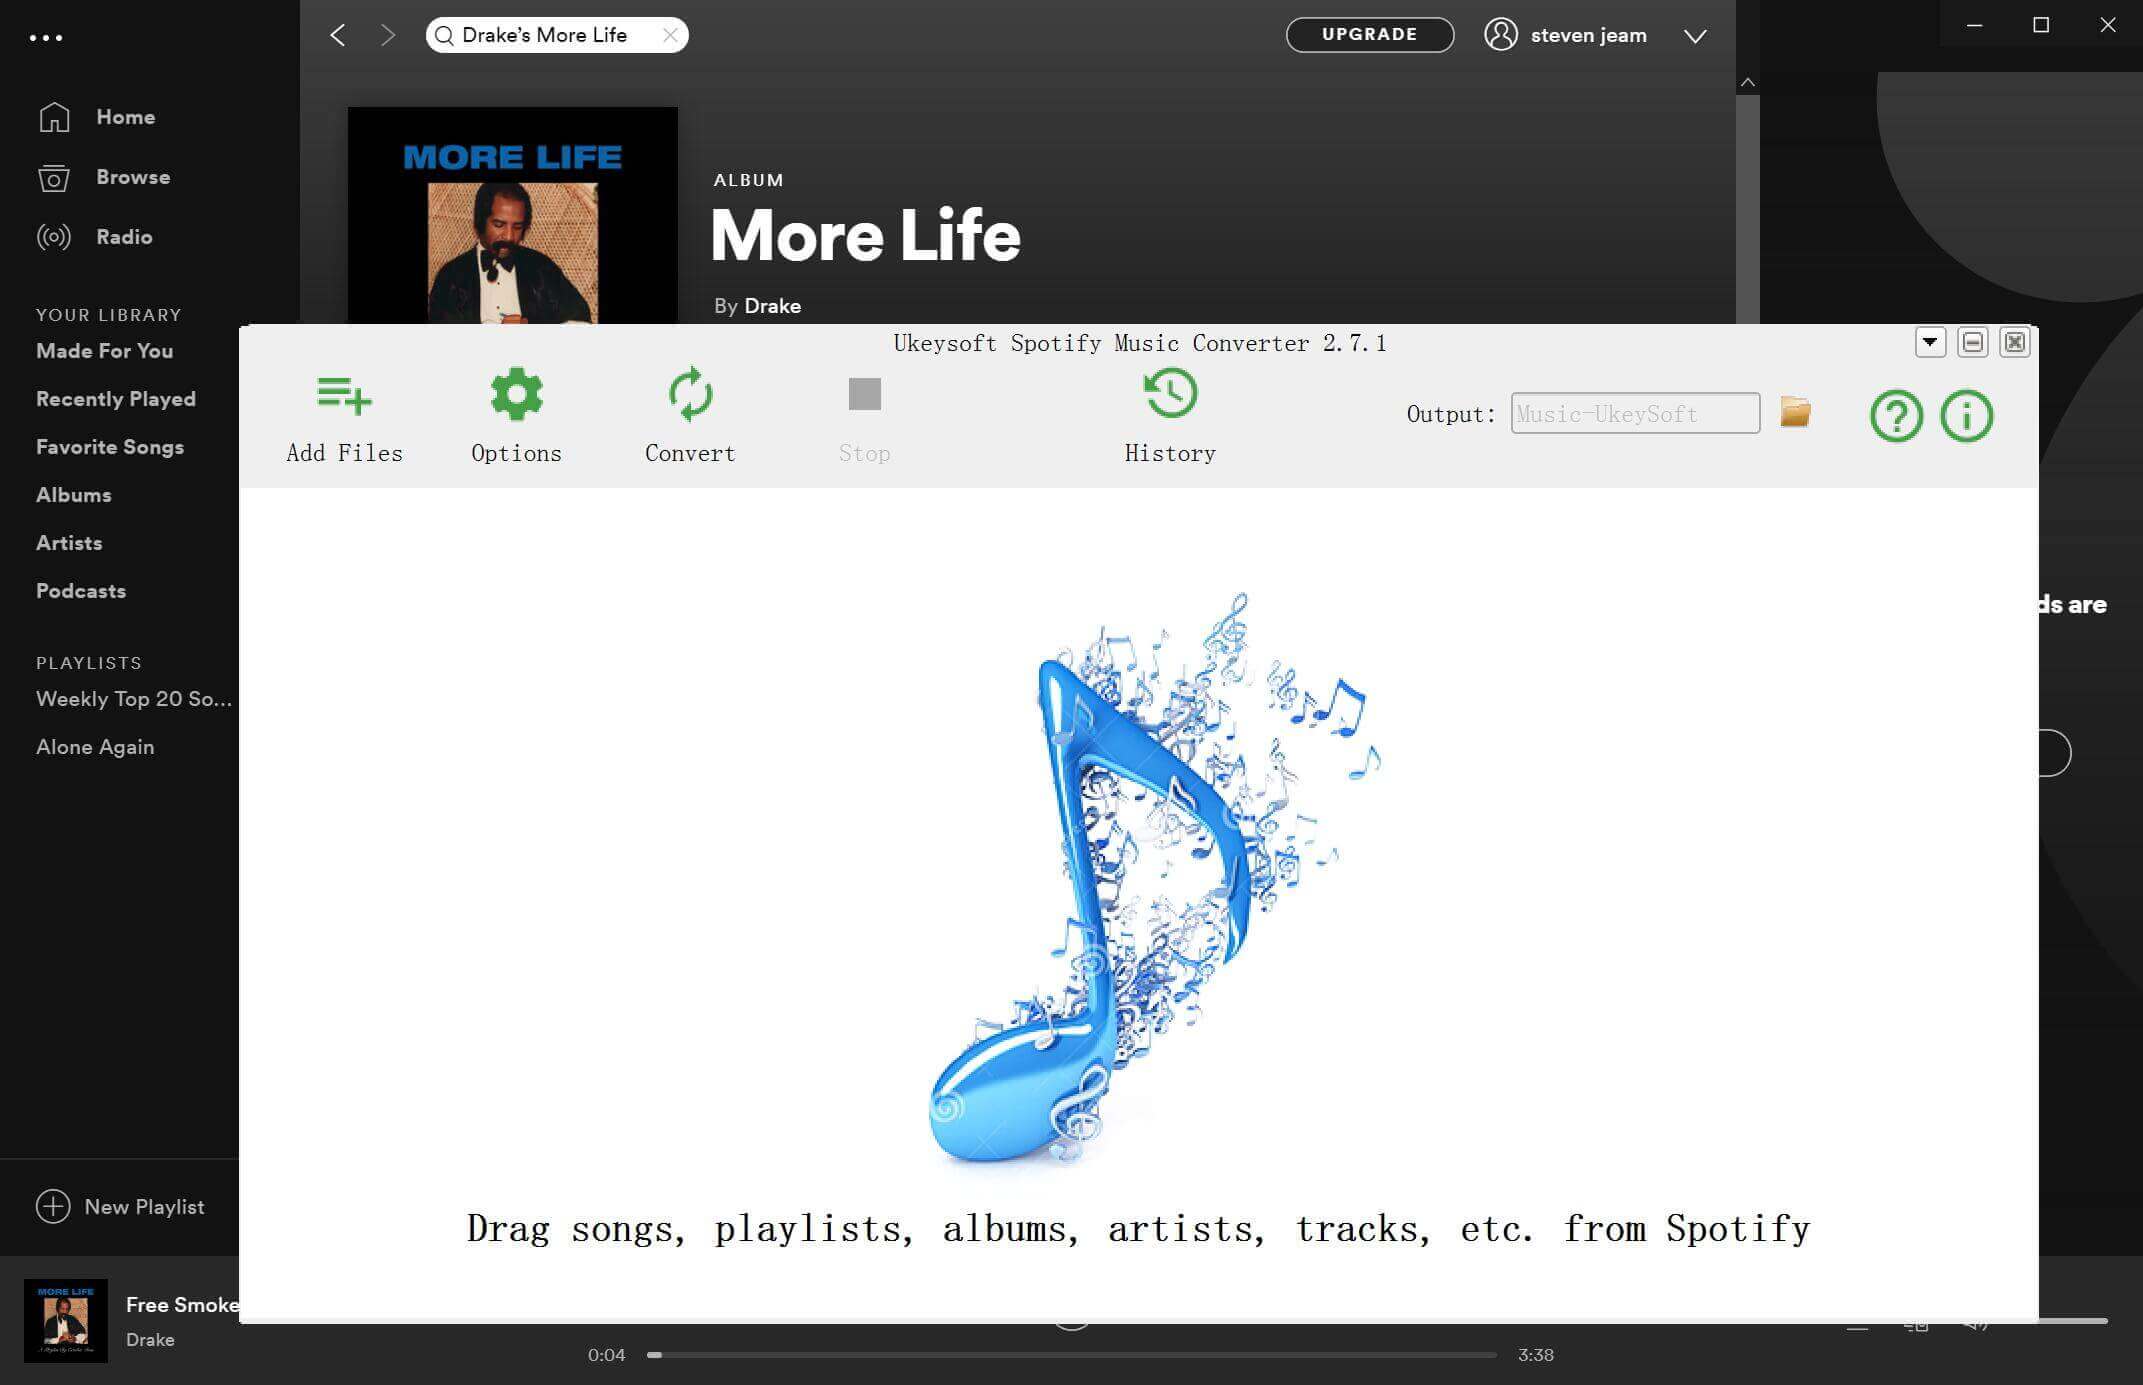 more life album download free mp3 mega